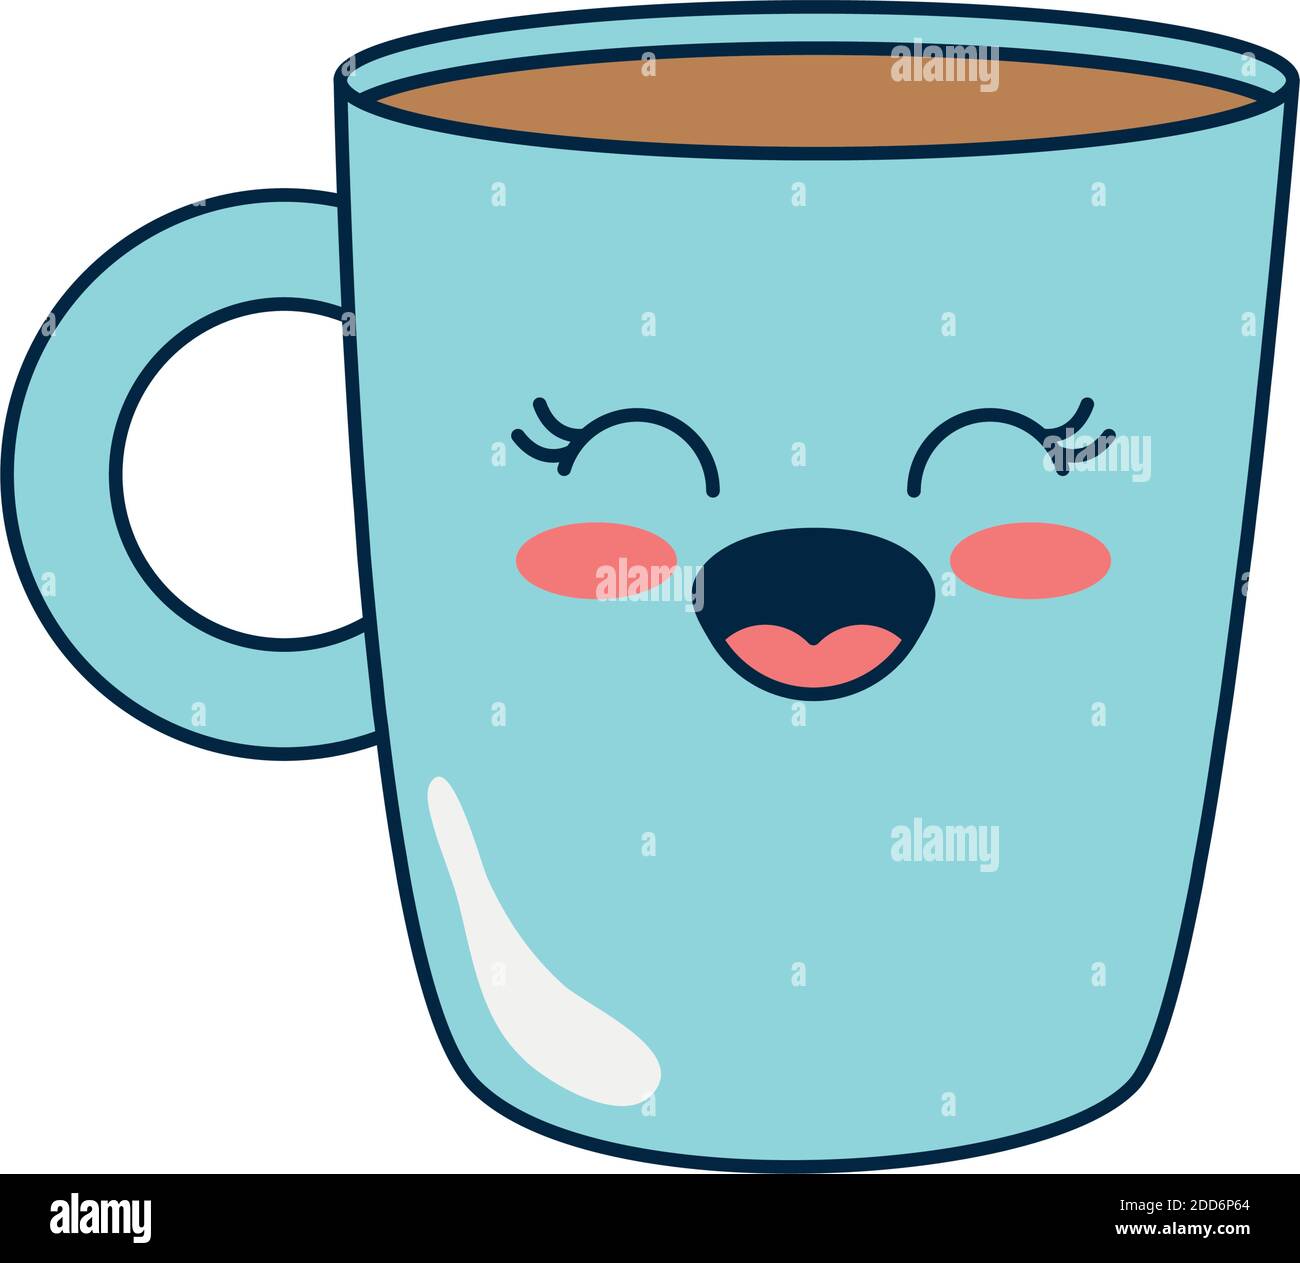 https://c8.alamy.com/comp/2DD6P64/kawaii-coffee-mug-icon-over-white-background-flat-style-vector-illustration-2DD6P64.jpg